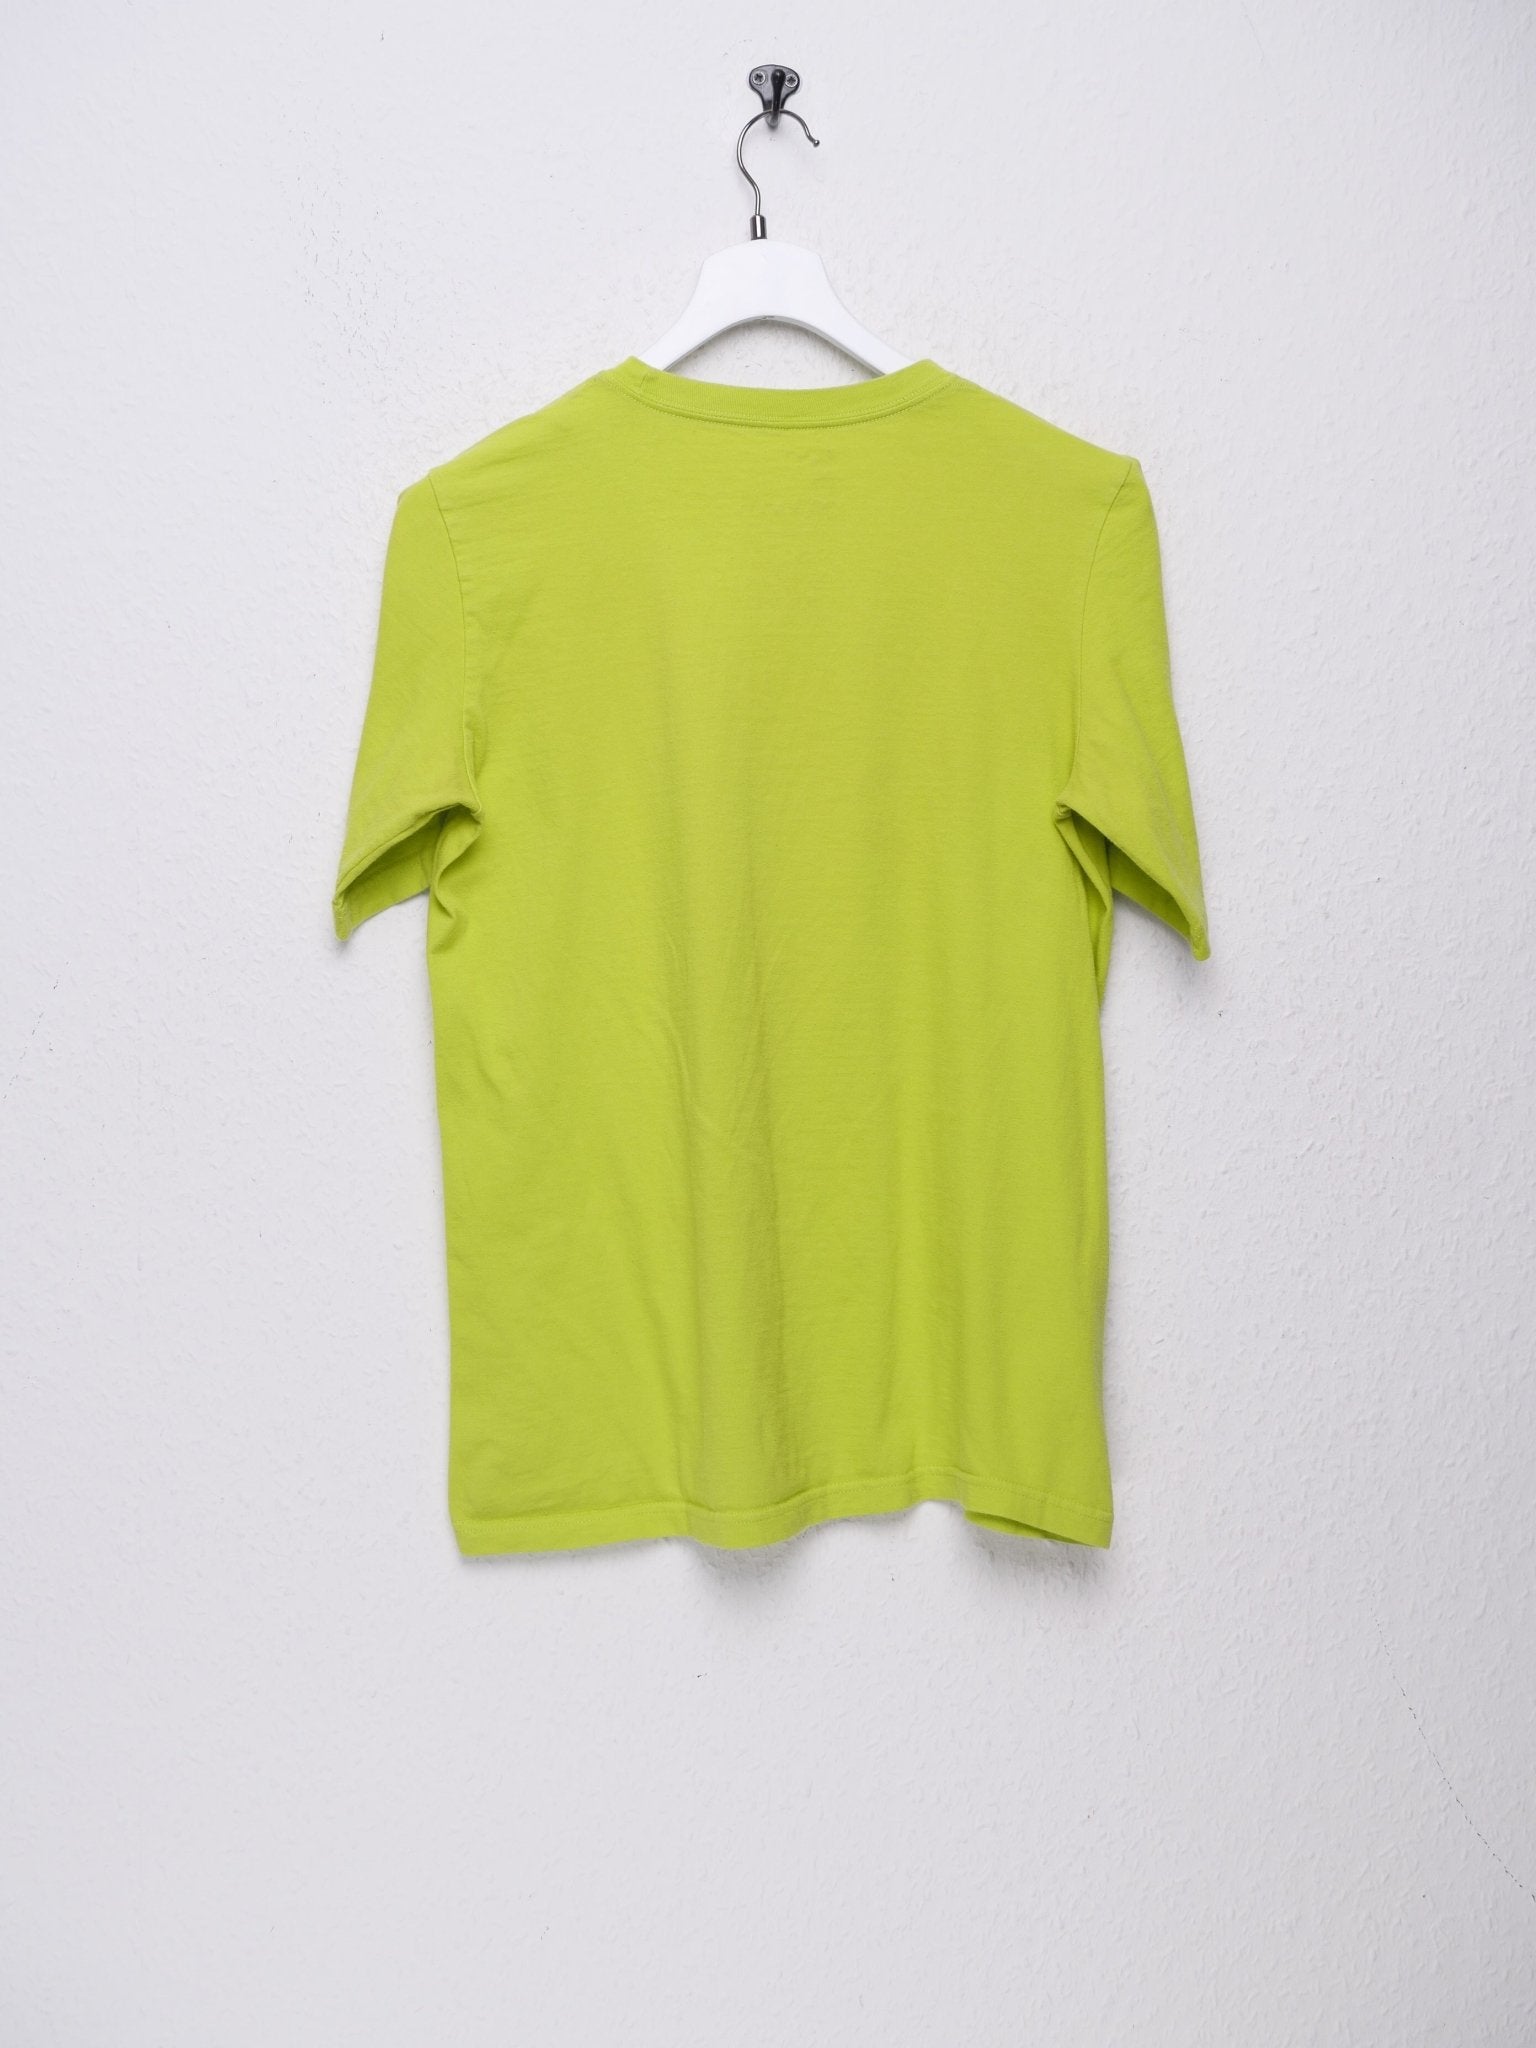 Nike 'no limits' Middle Swoosh lemon Shirt - Peeces